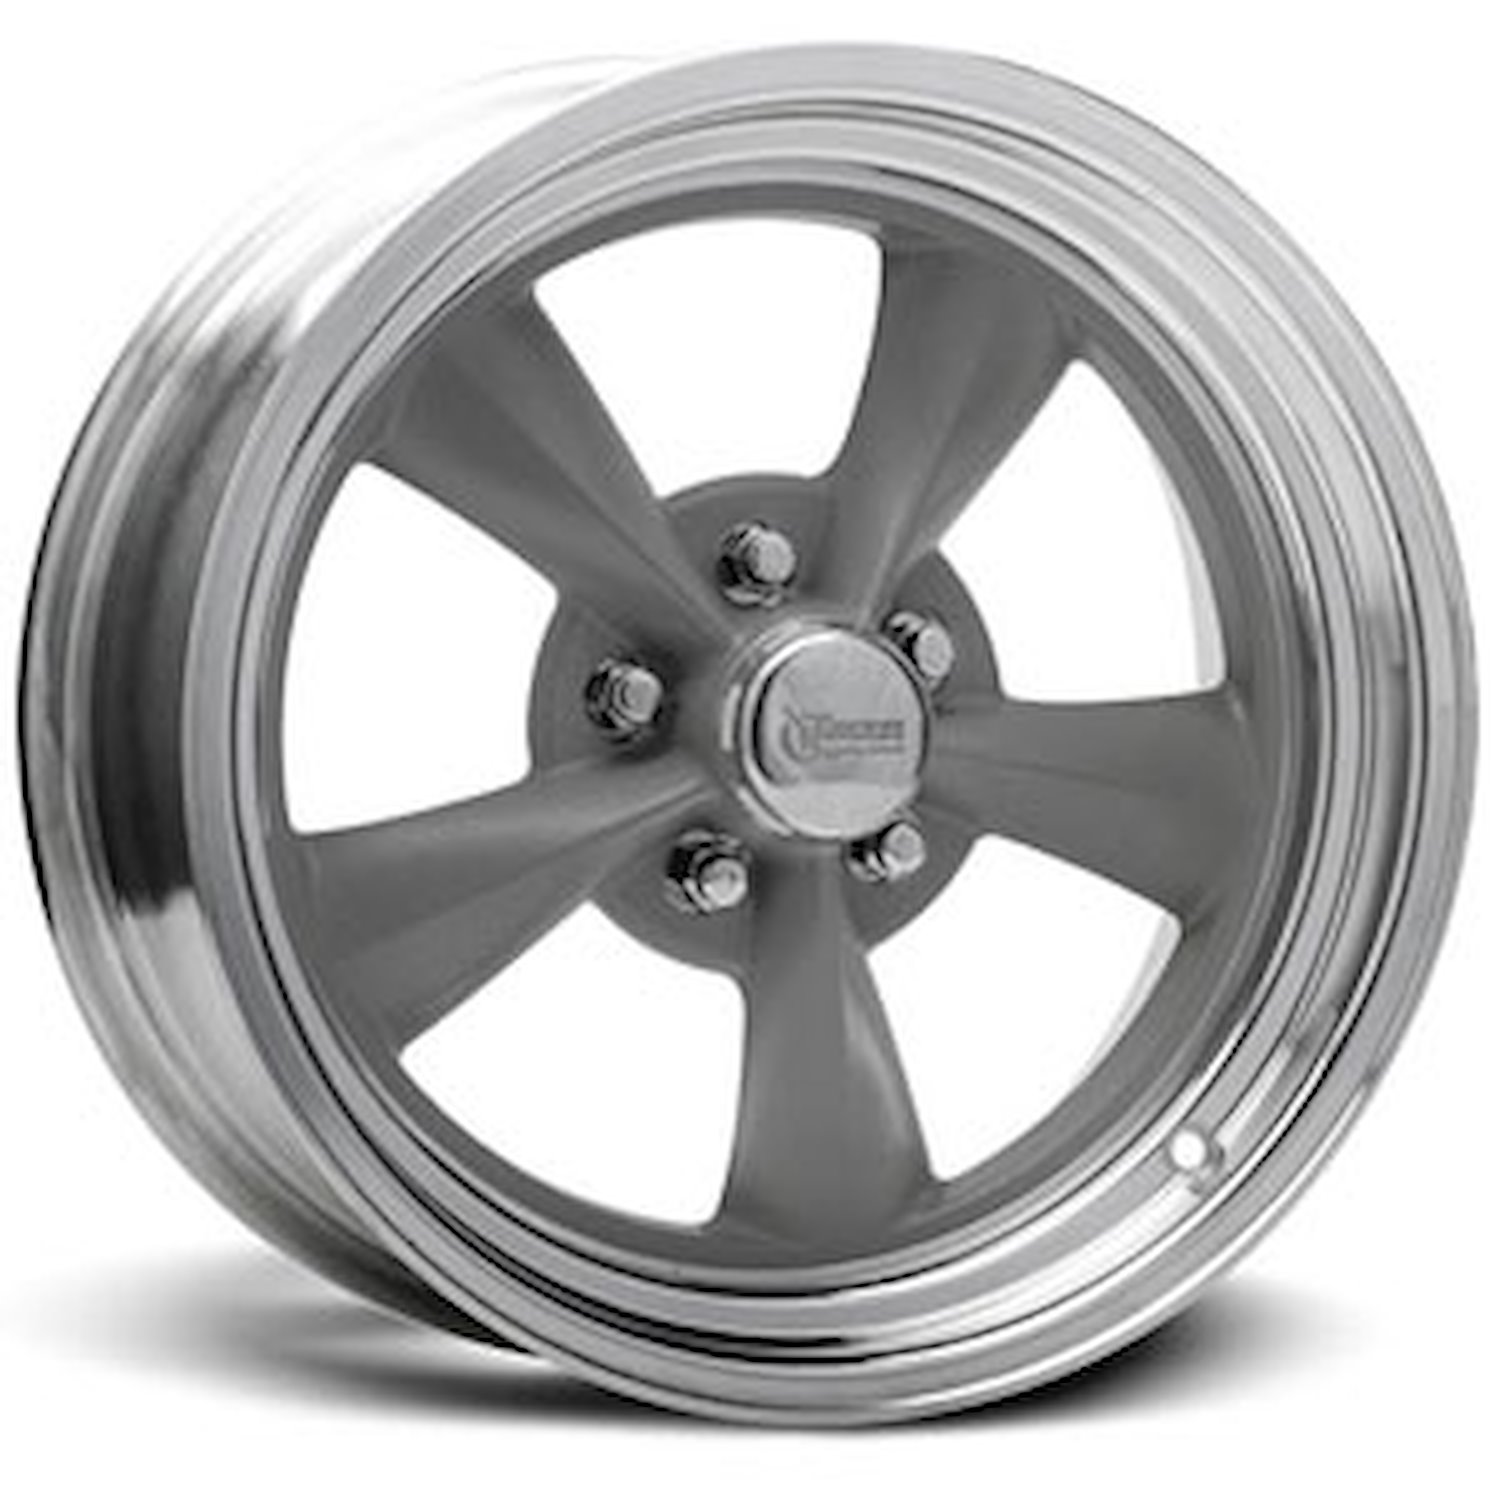 Fuel Wheel - Gray Size: 17" x 8"